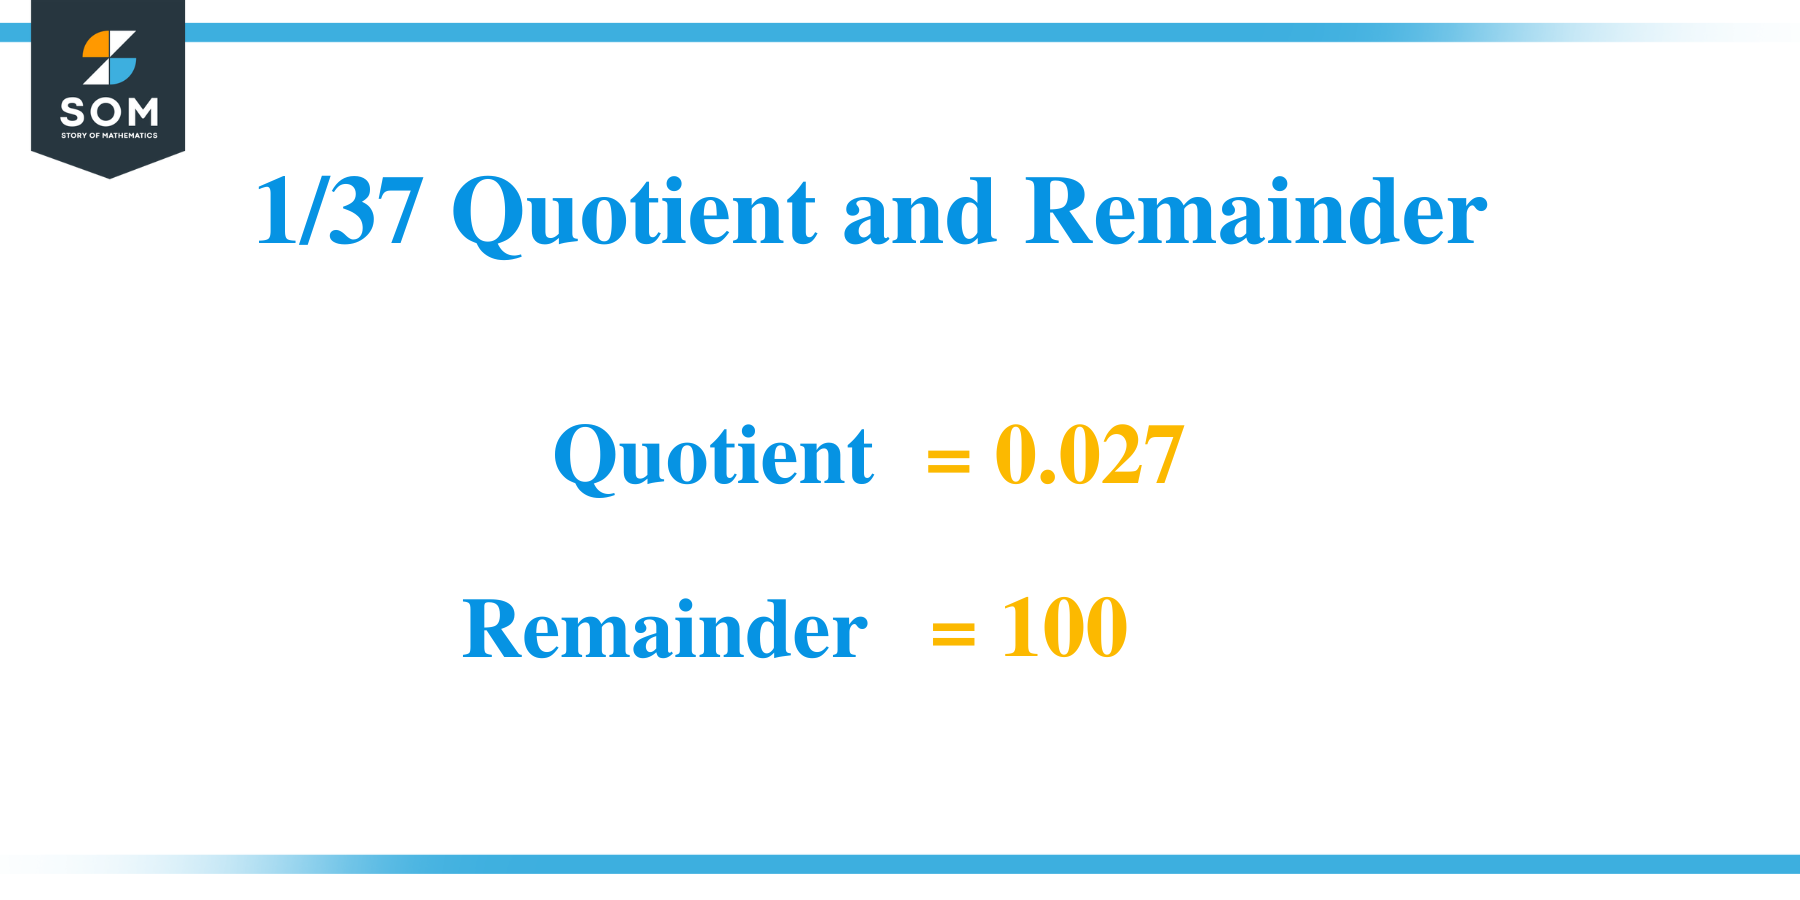 1_37 Quotient and Remainder